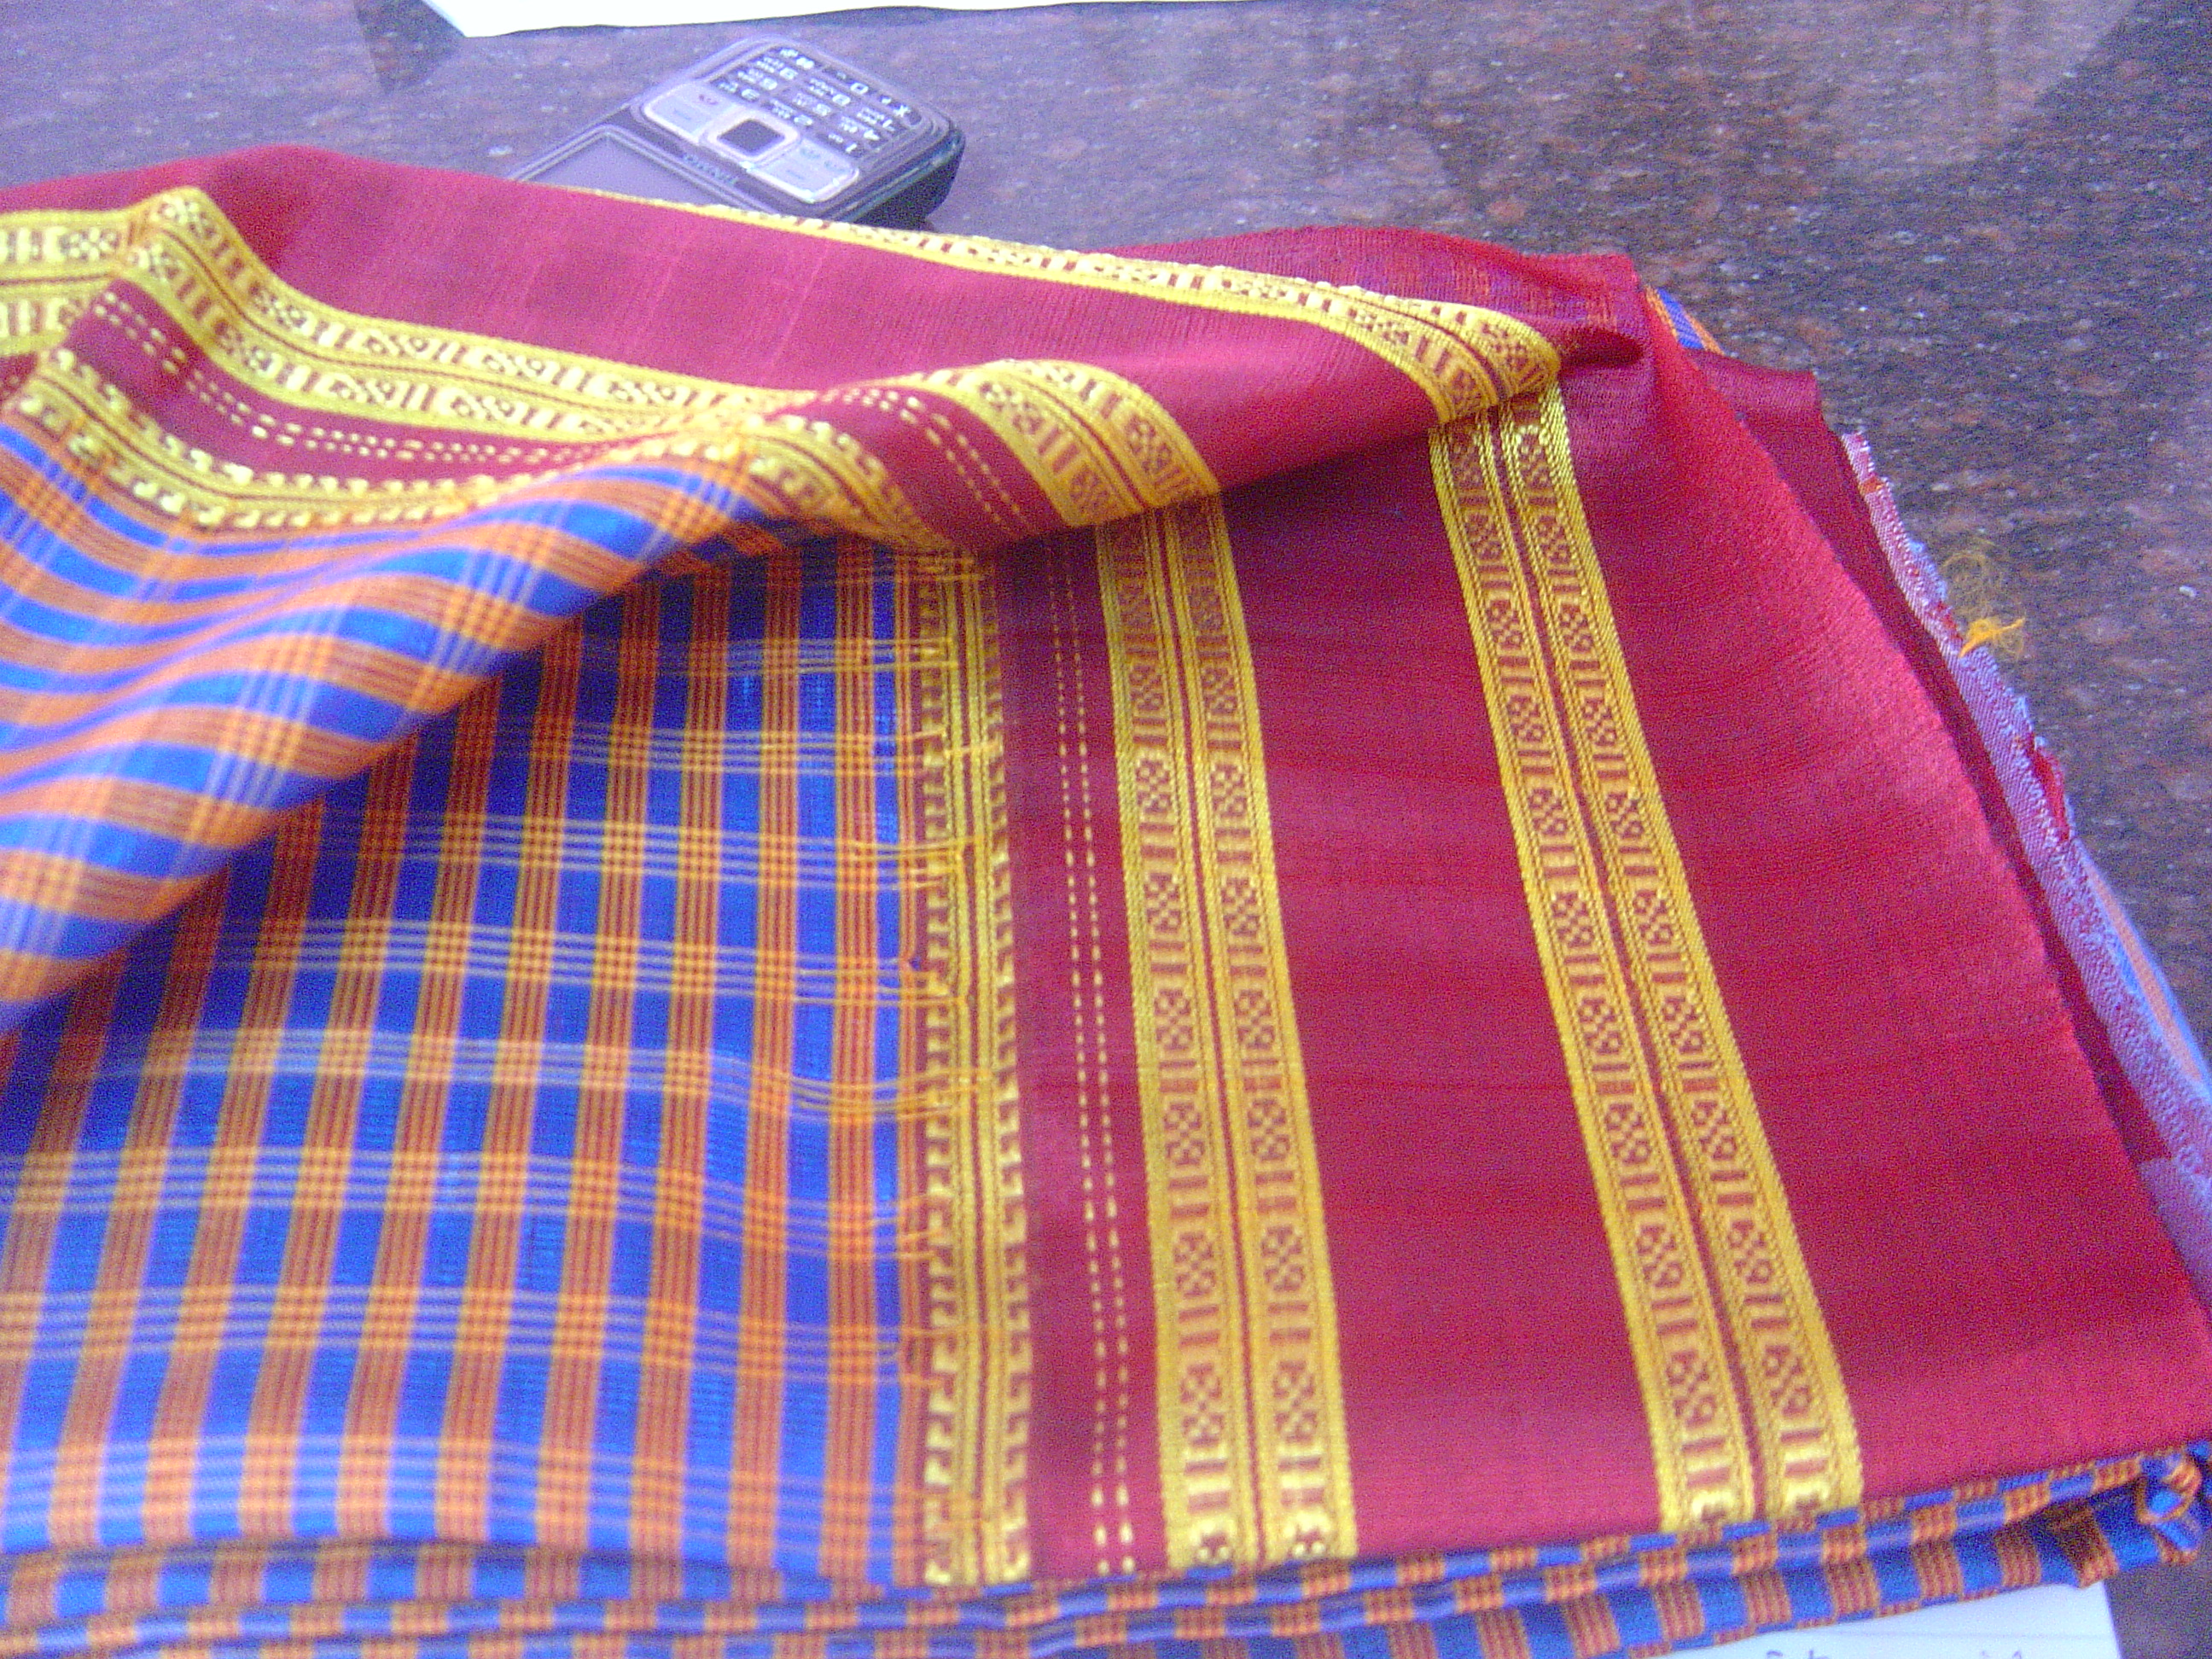 Ilkal Sari Weaving of Karnataka